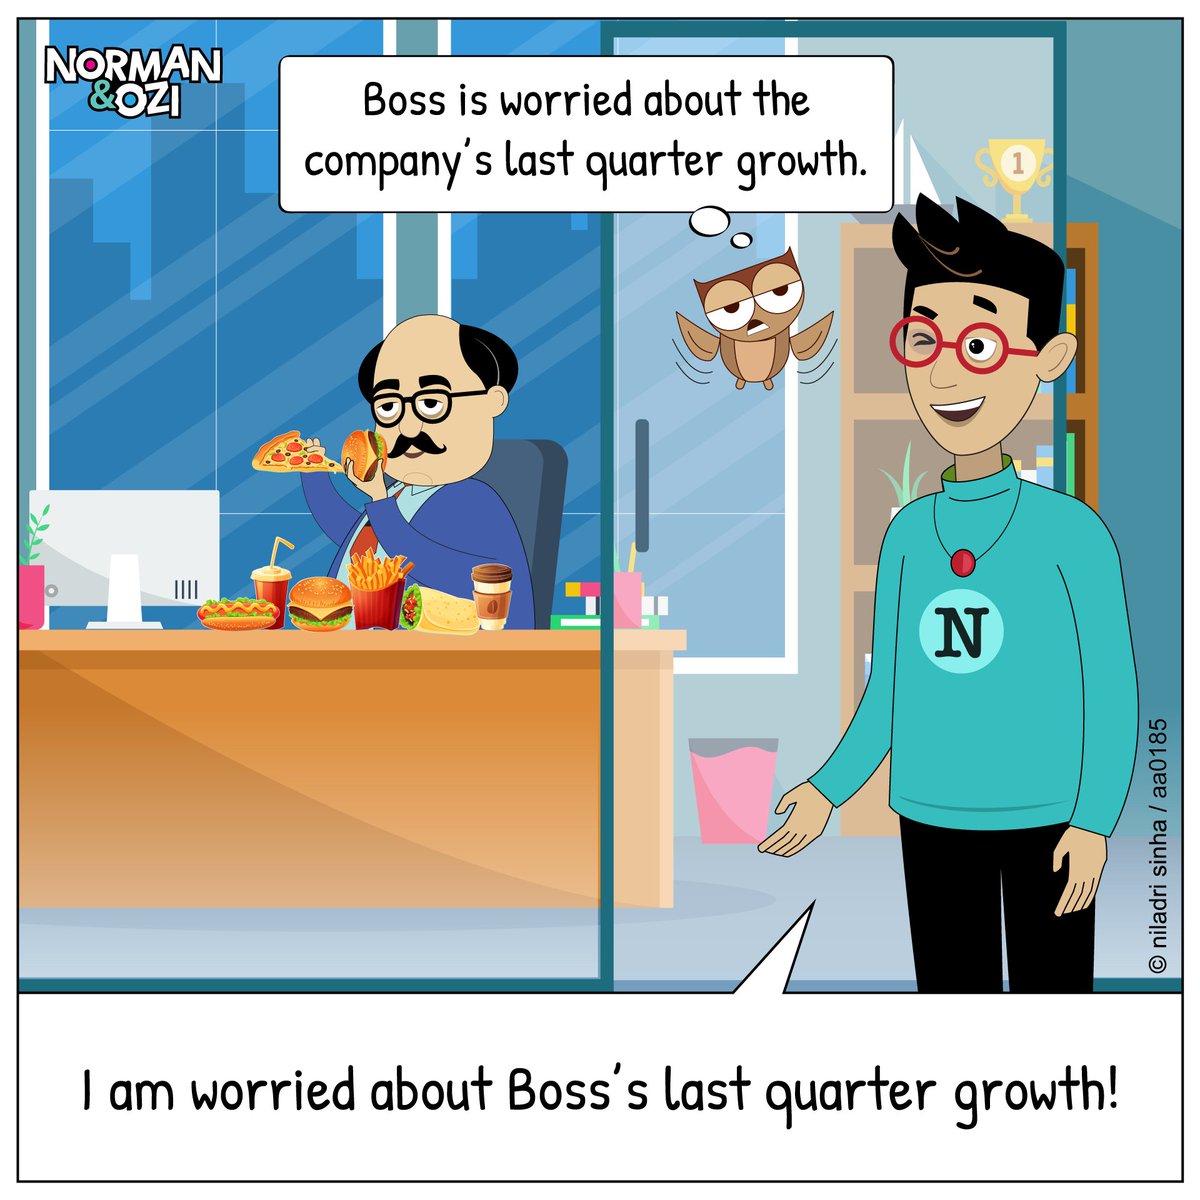 #boss #growth #companygrowth #employee #company #humor #corporatejokes #businesscartoons #comicstrips #memes #dailymemes #cartoon #officehumor #workhumor #teamwork